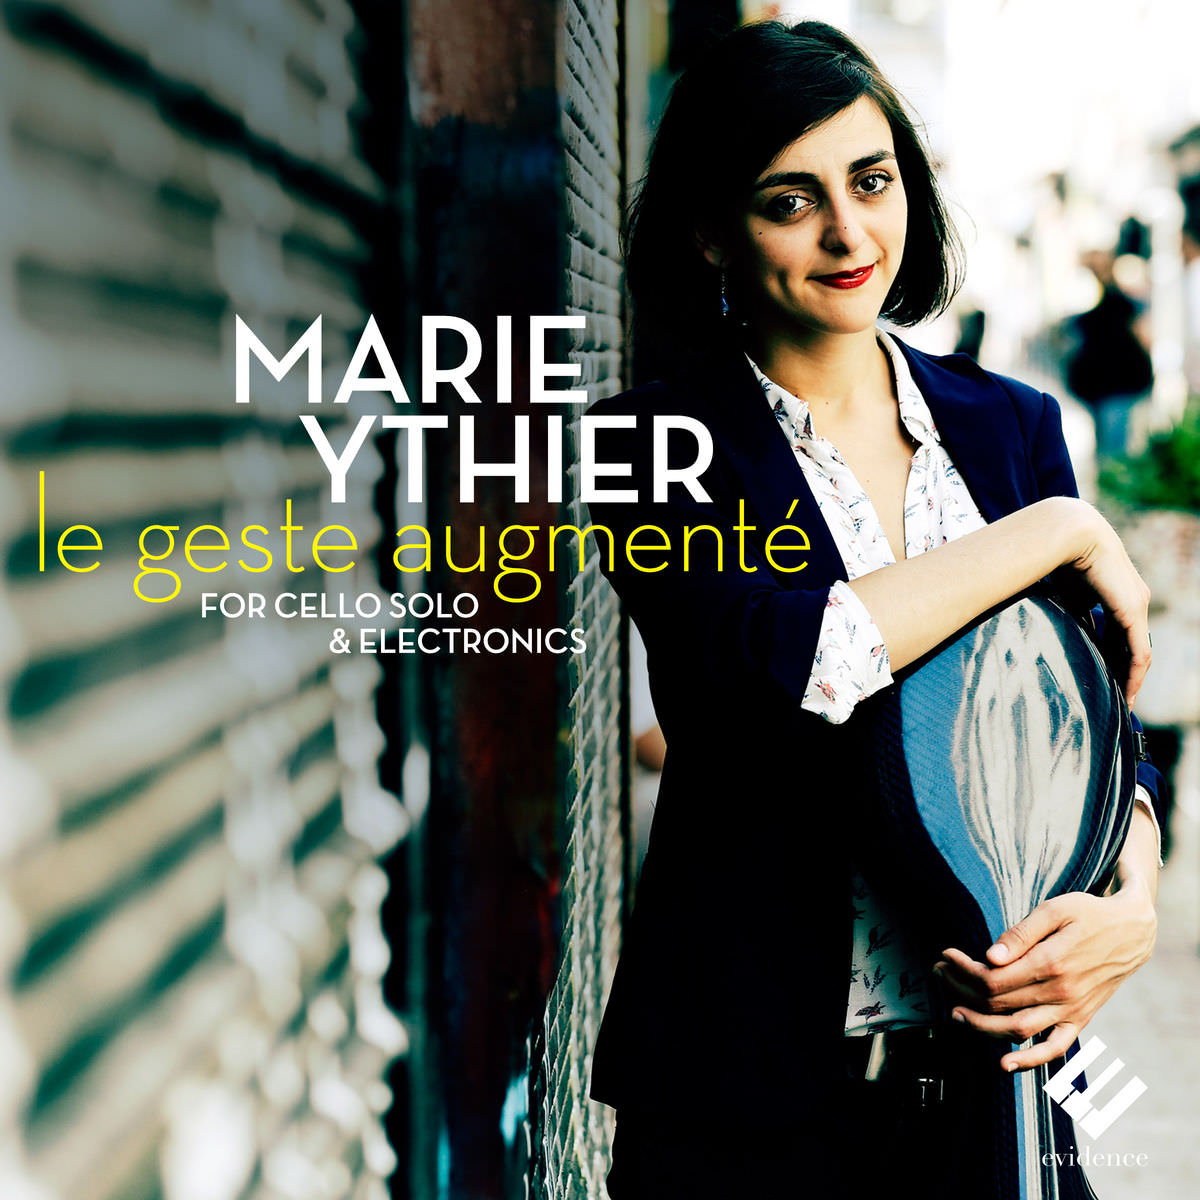 Marie Ythier - Le geste augmente for Cello Solo & Electronics (Transaural & Binaural Versions) (2015) [FLAC 24bit/48kHz]